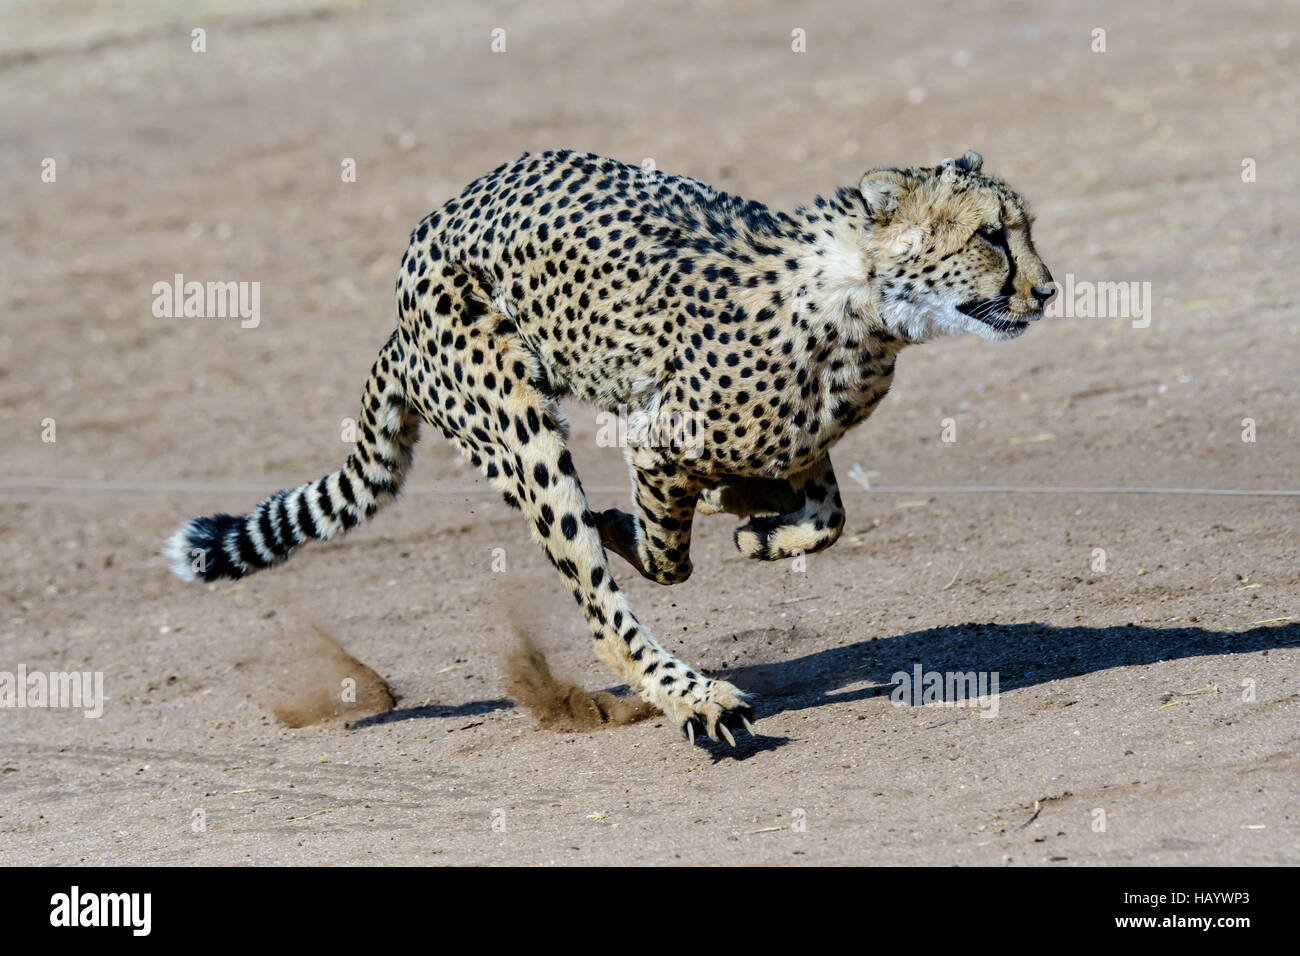 Speedy cheetah in full motion Stock Photo